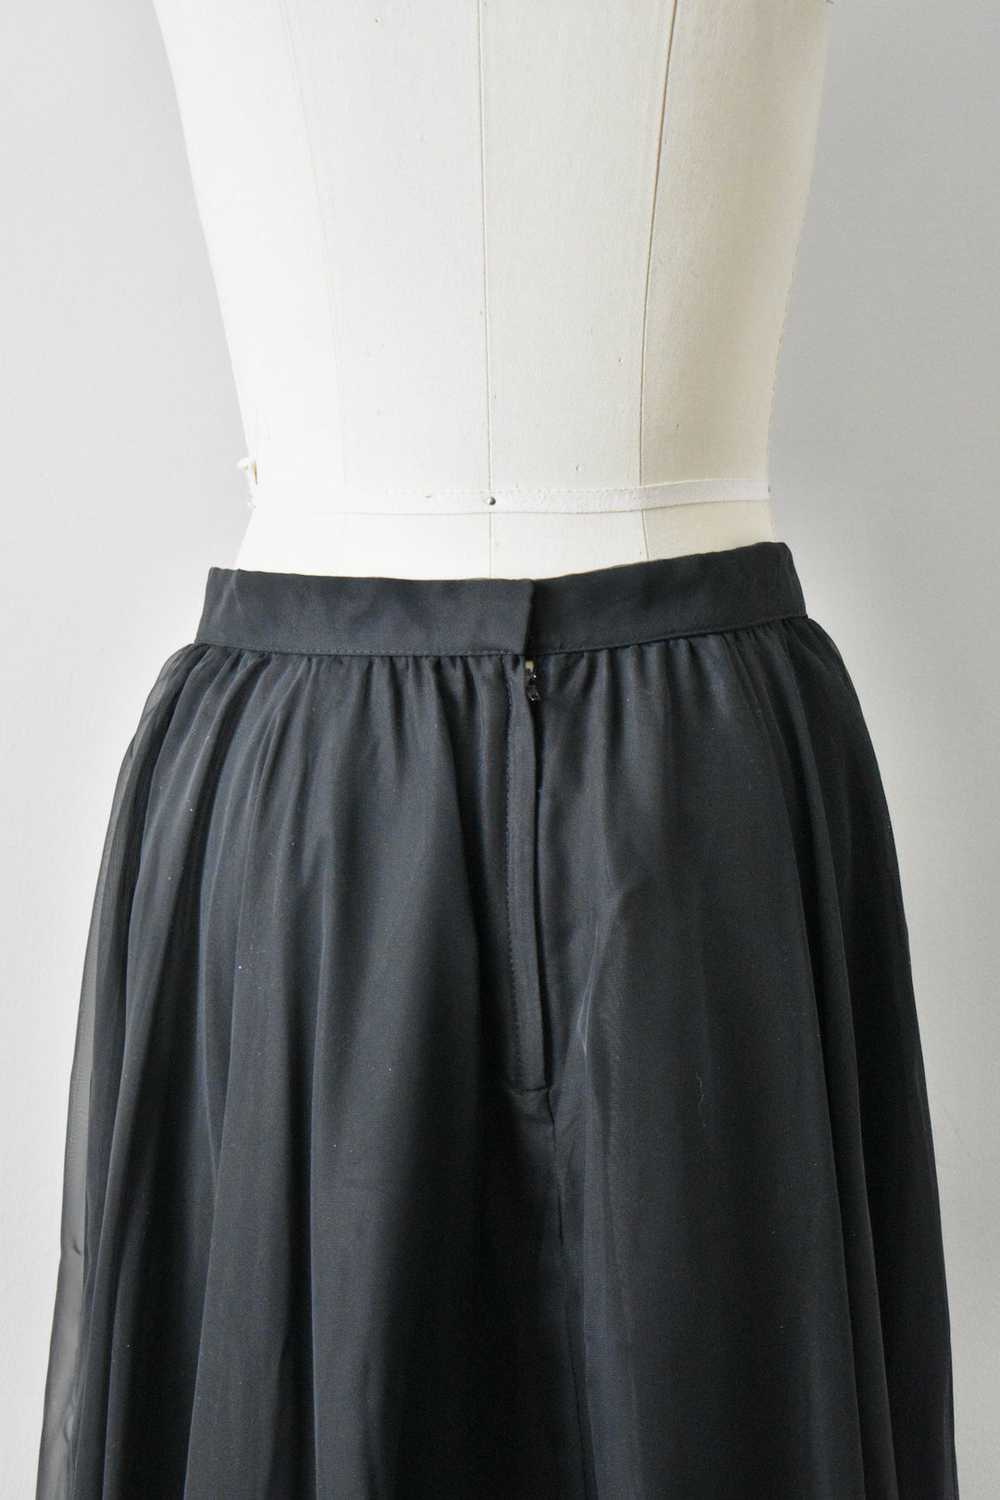 Vintage 1970s Flowy Black Skirt - image 4